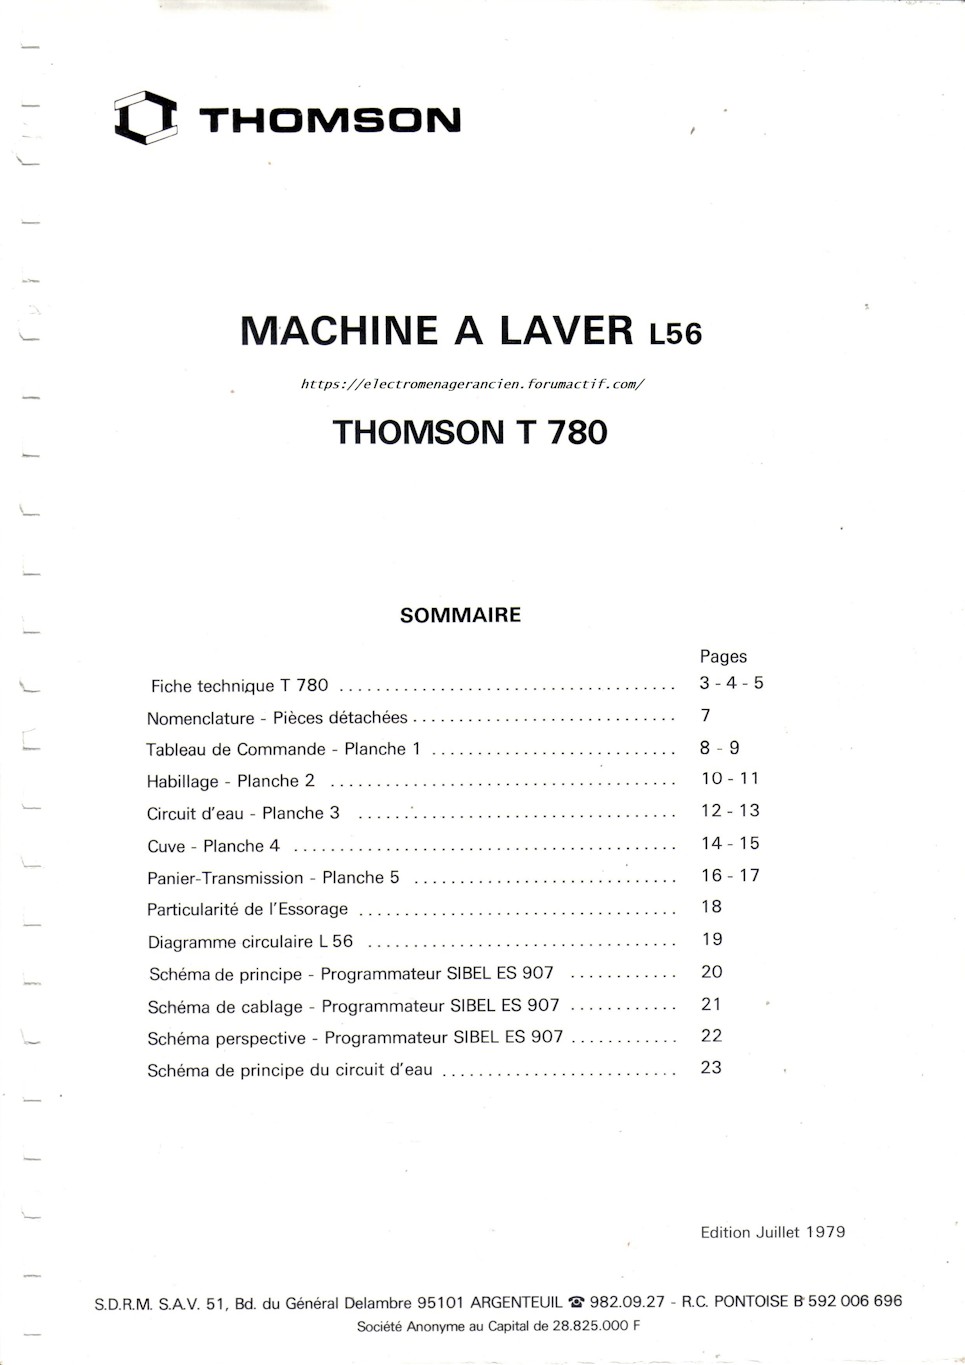 Thomson T780